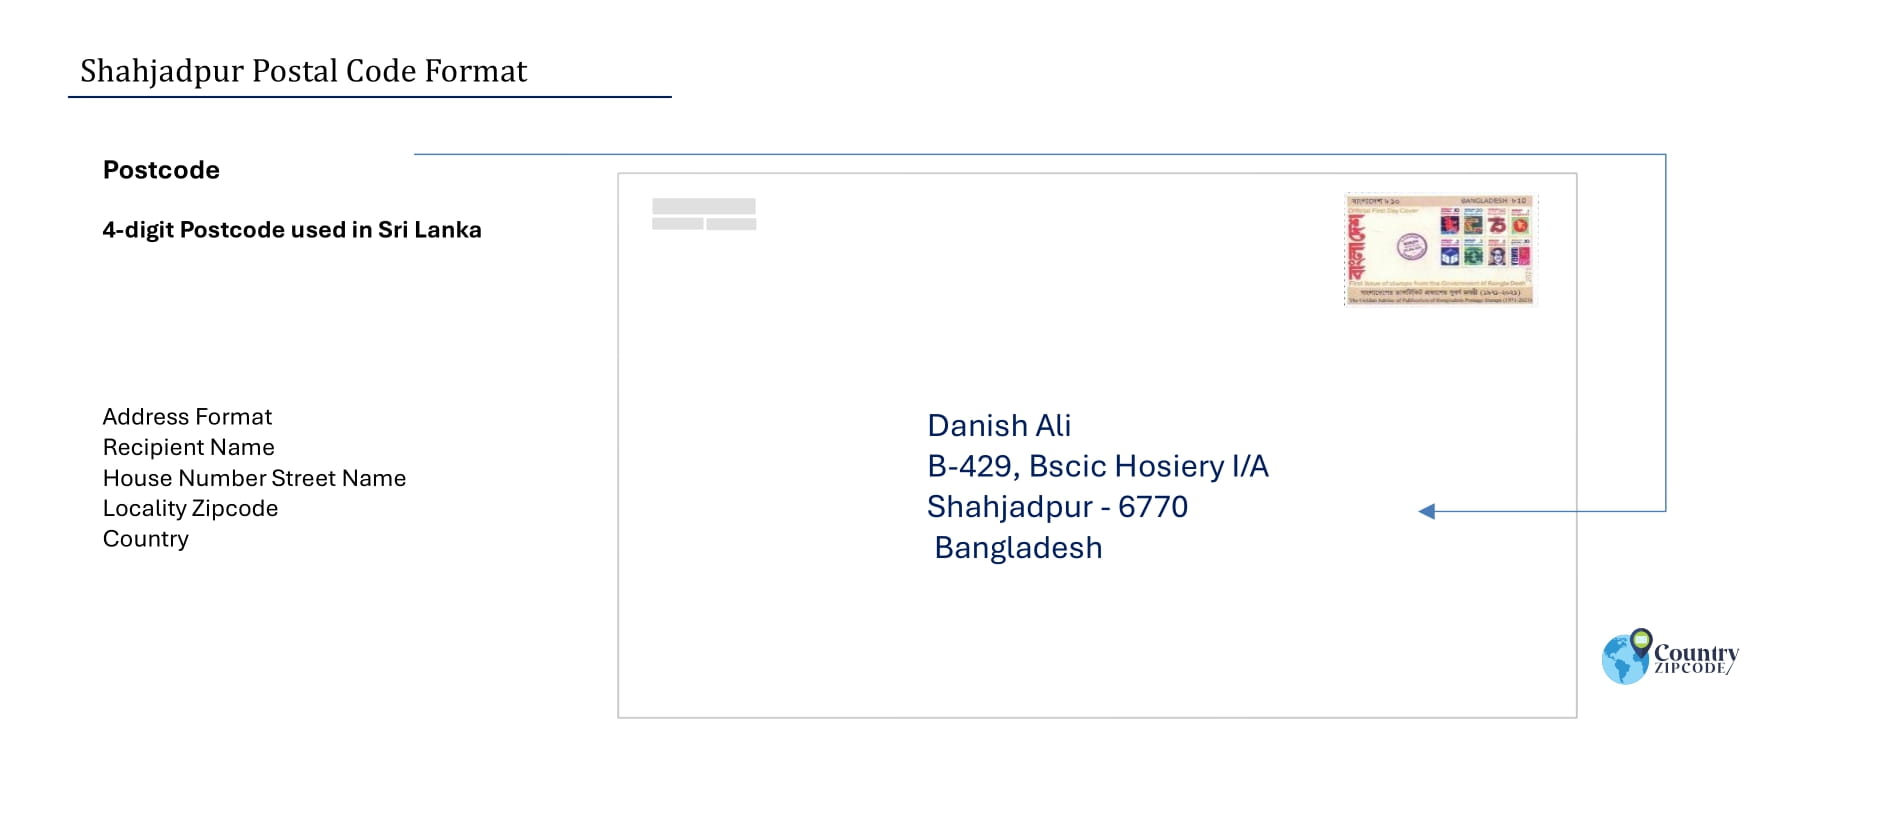 Shahjadpur Postal code format